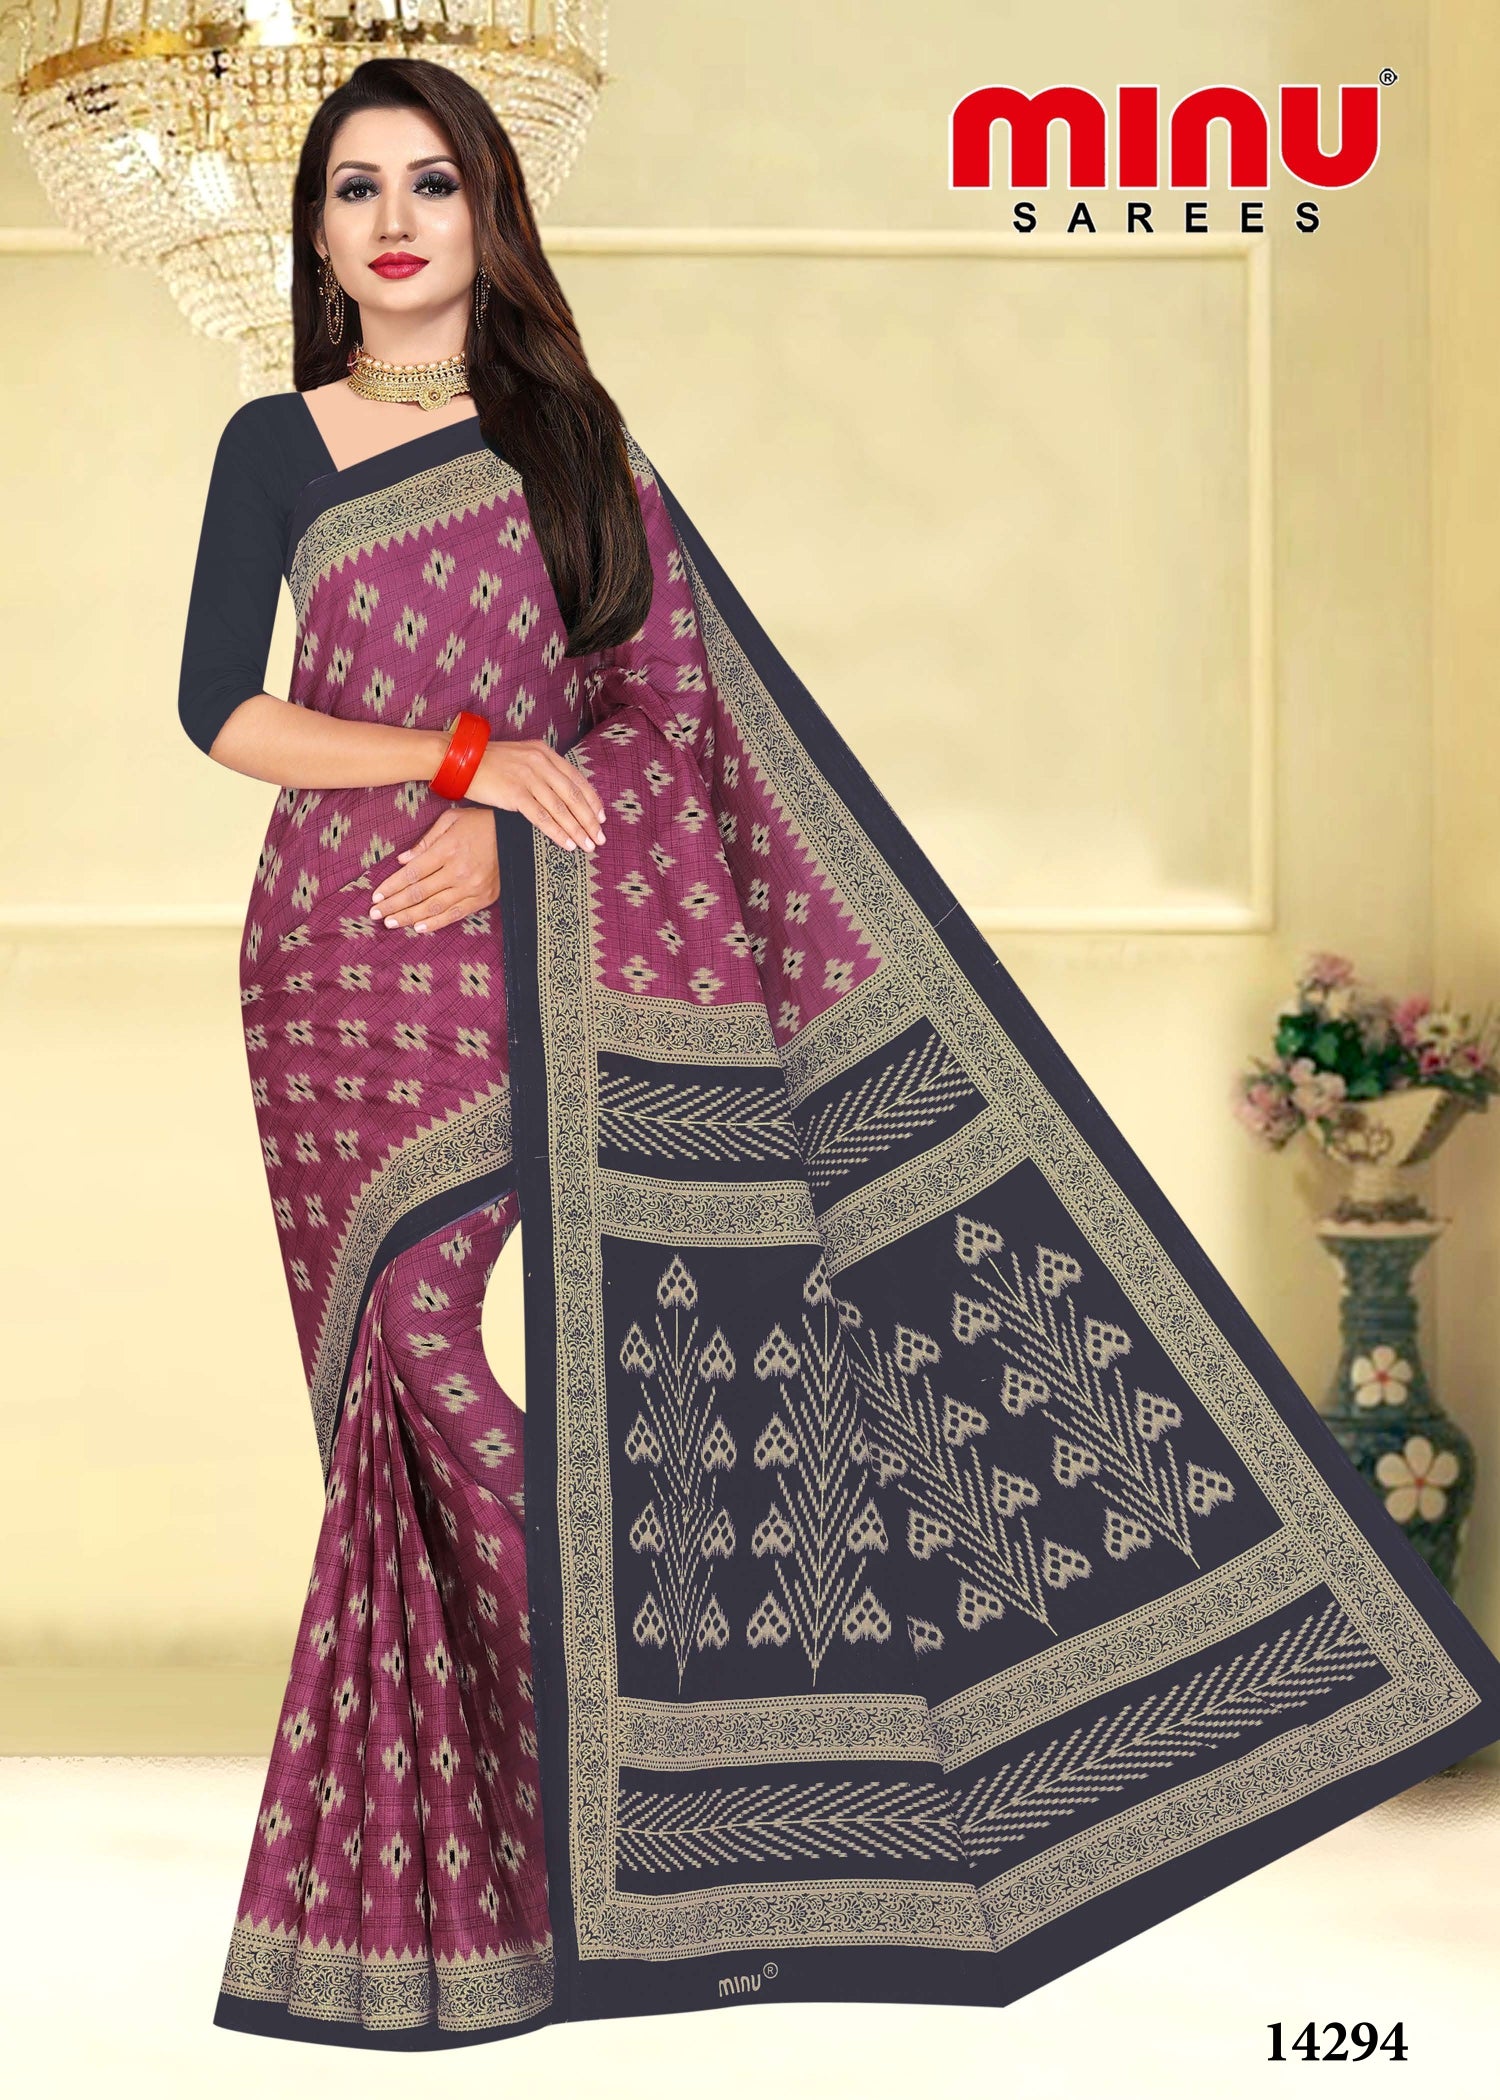 color printed saree wearing woman